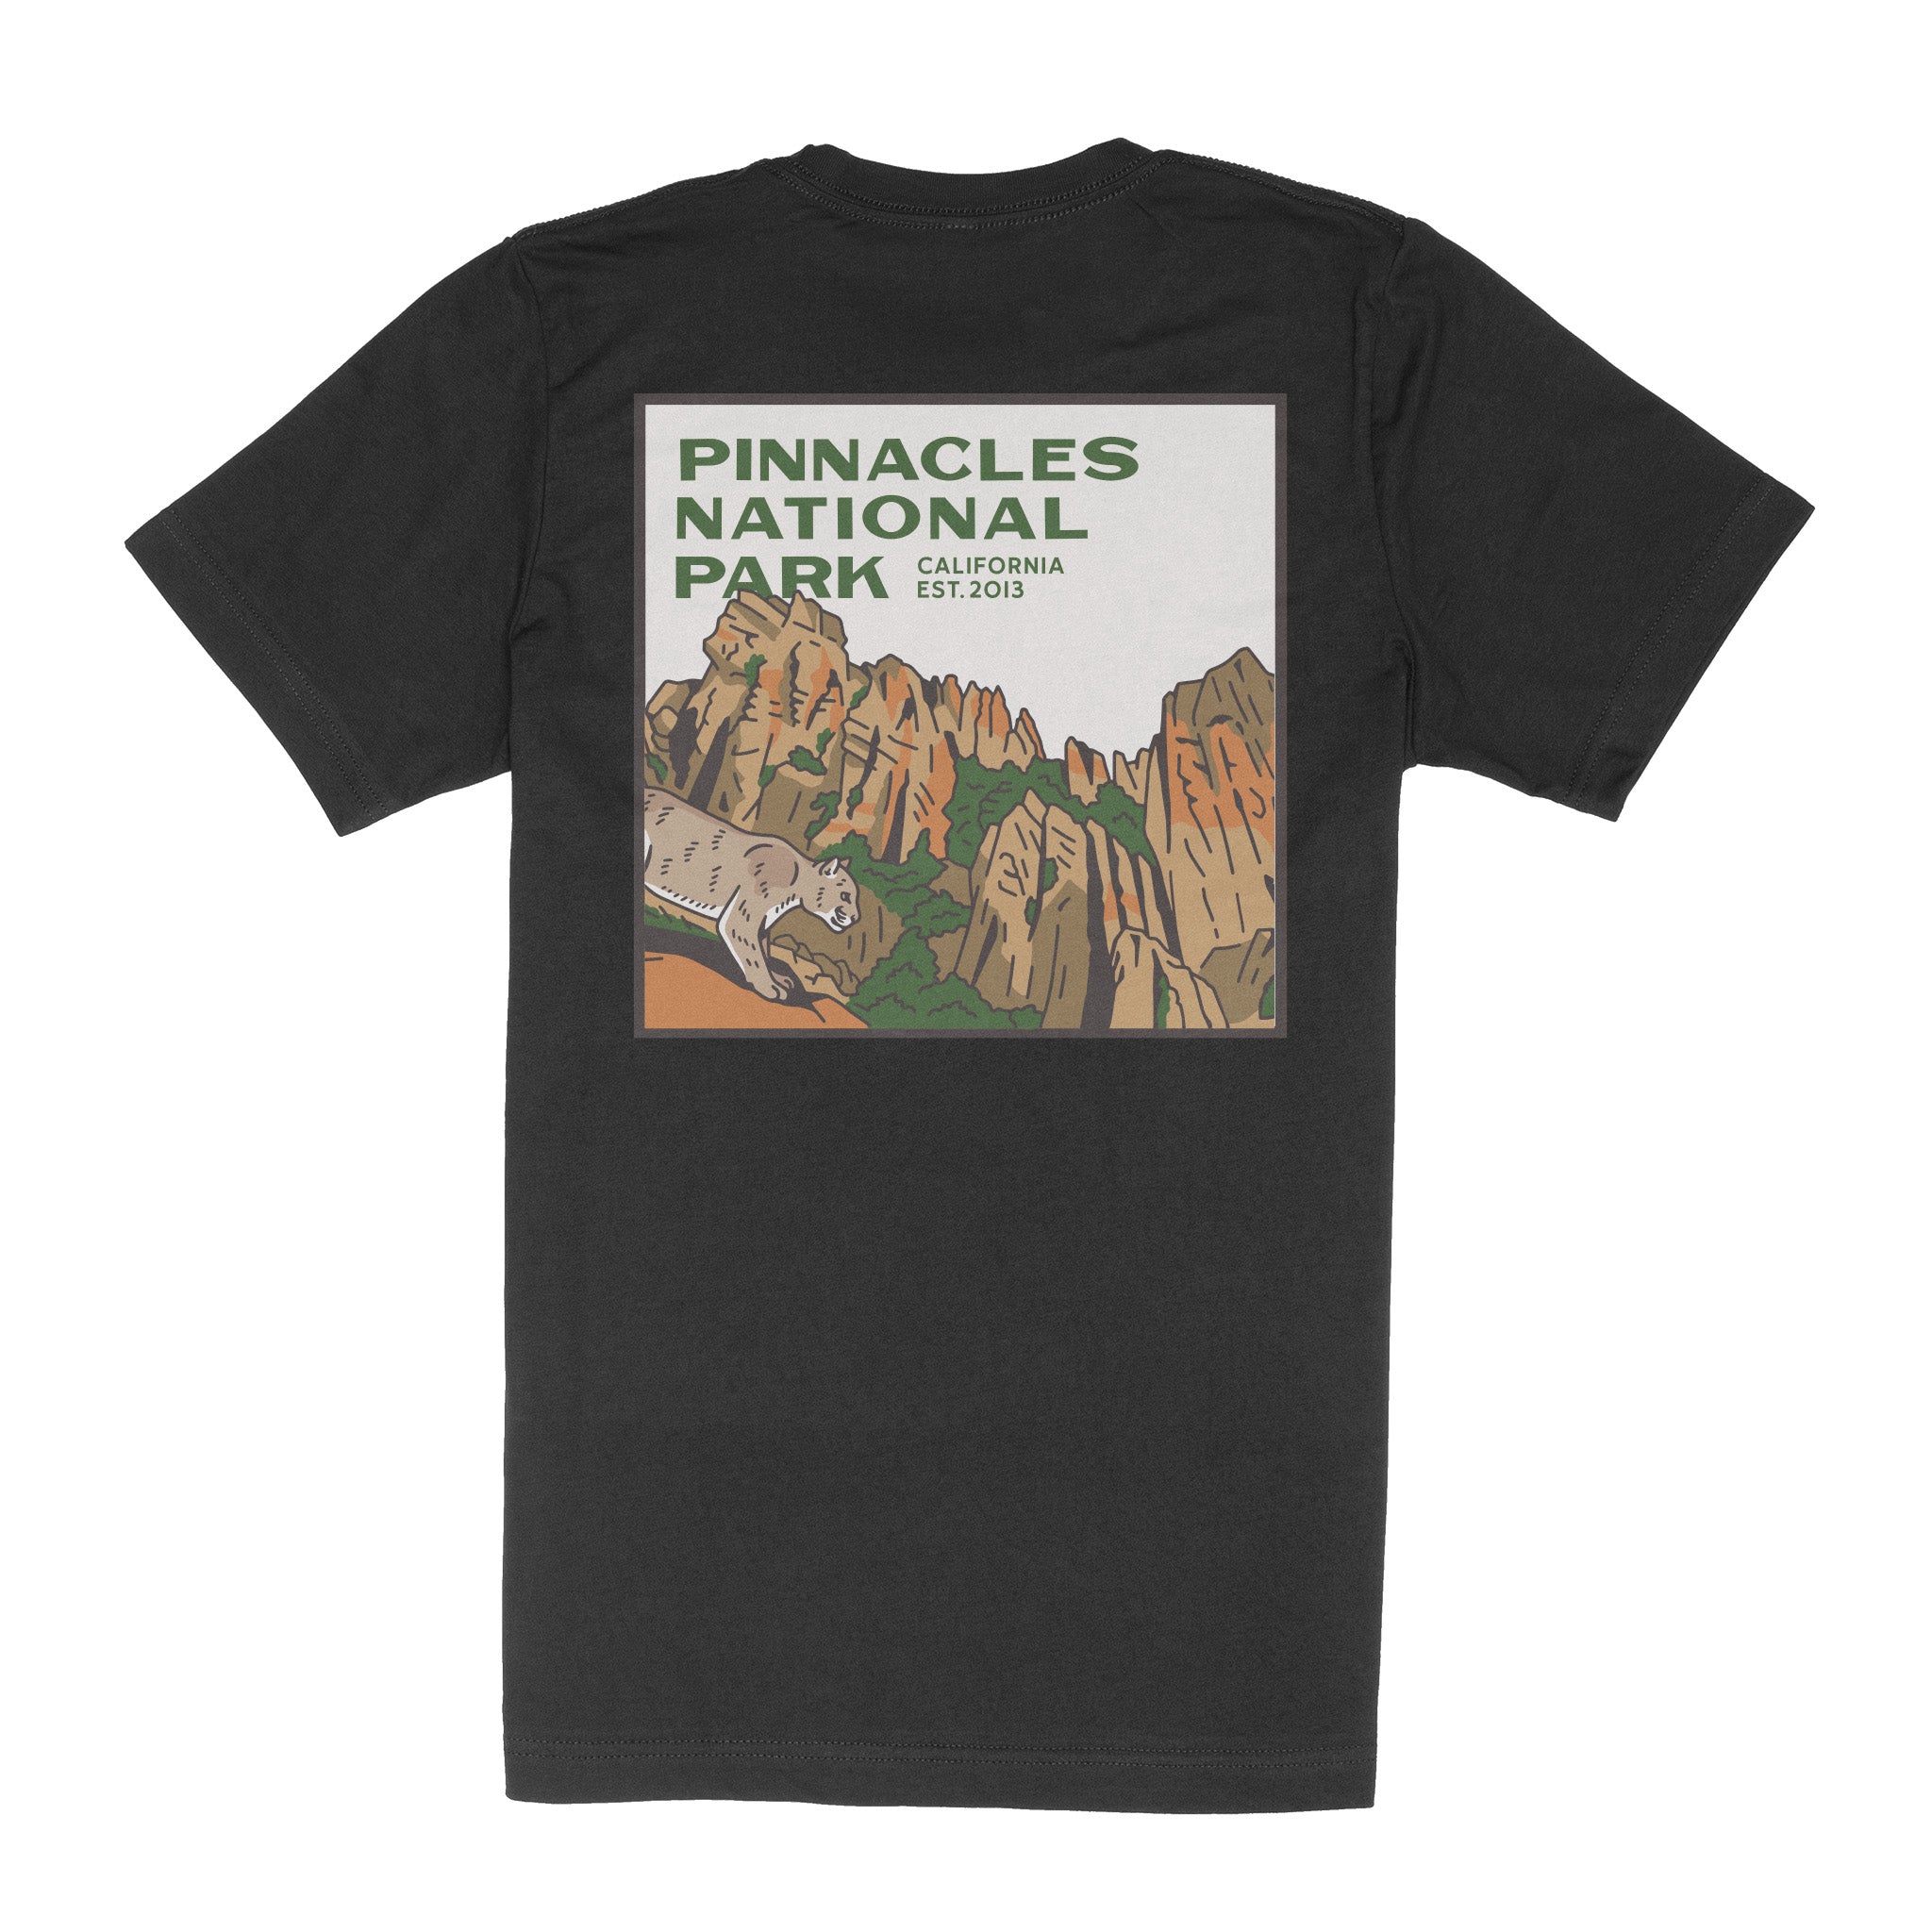 Pinnacles National Park Tee